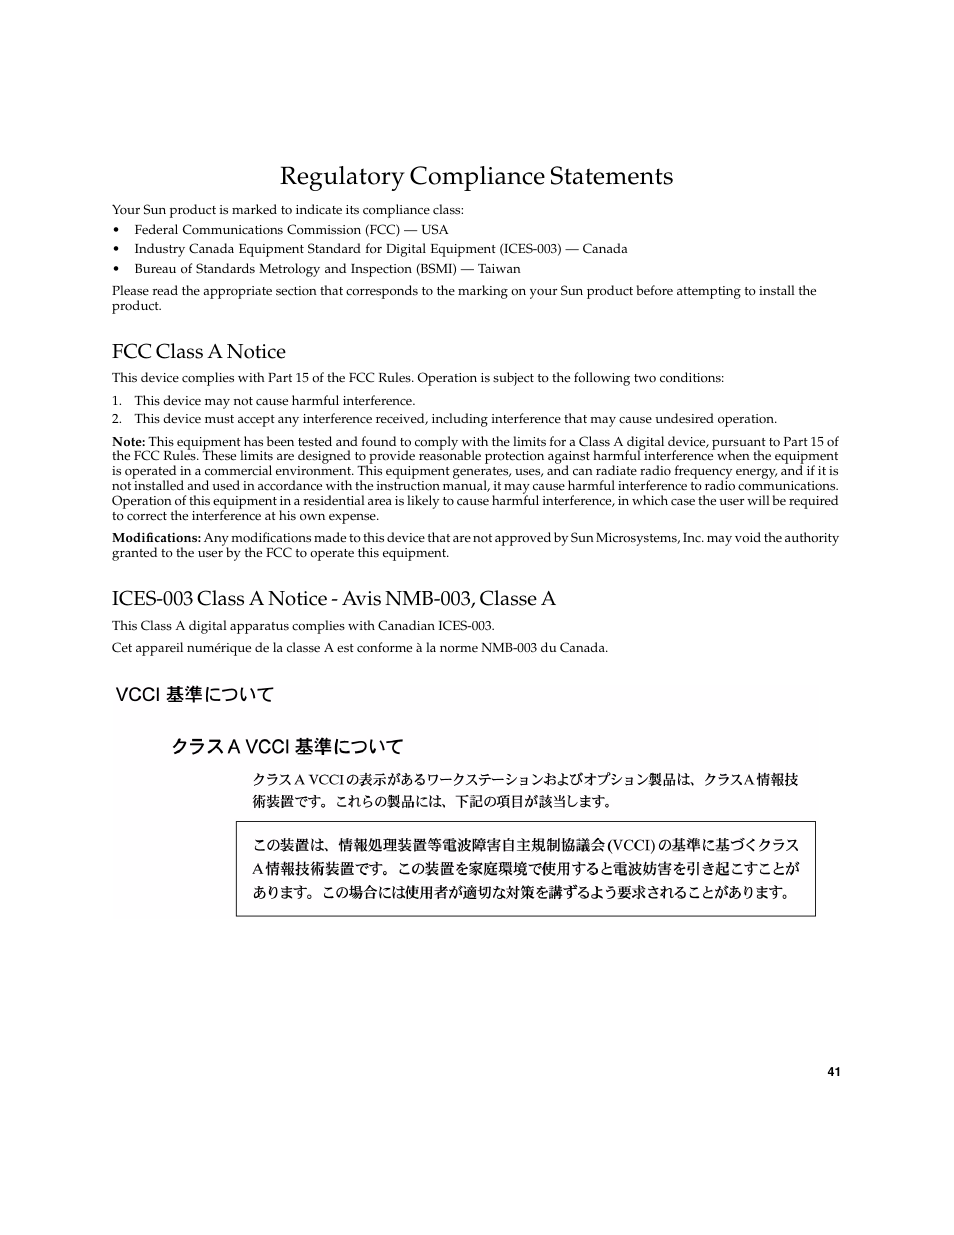 Regulatory compliance statements, Fcc class a notice, Ices-003 class a notice - avis nmb-003, classe a | Oracle Audio Technologies Sun StorageTek ATCA 4Gb FC Dual Port HBA SG-XPCIE2FC-ATCA-Z User Manual | Page 47 / 48